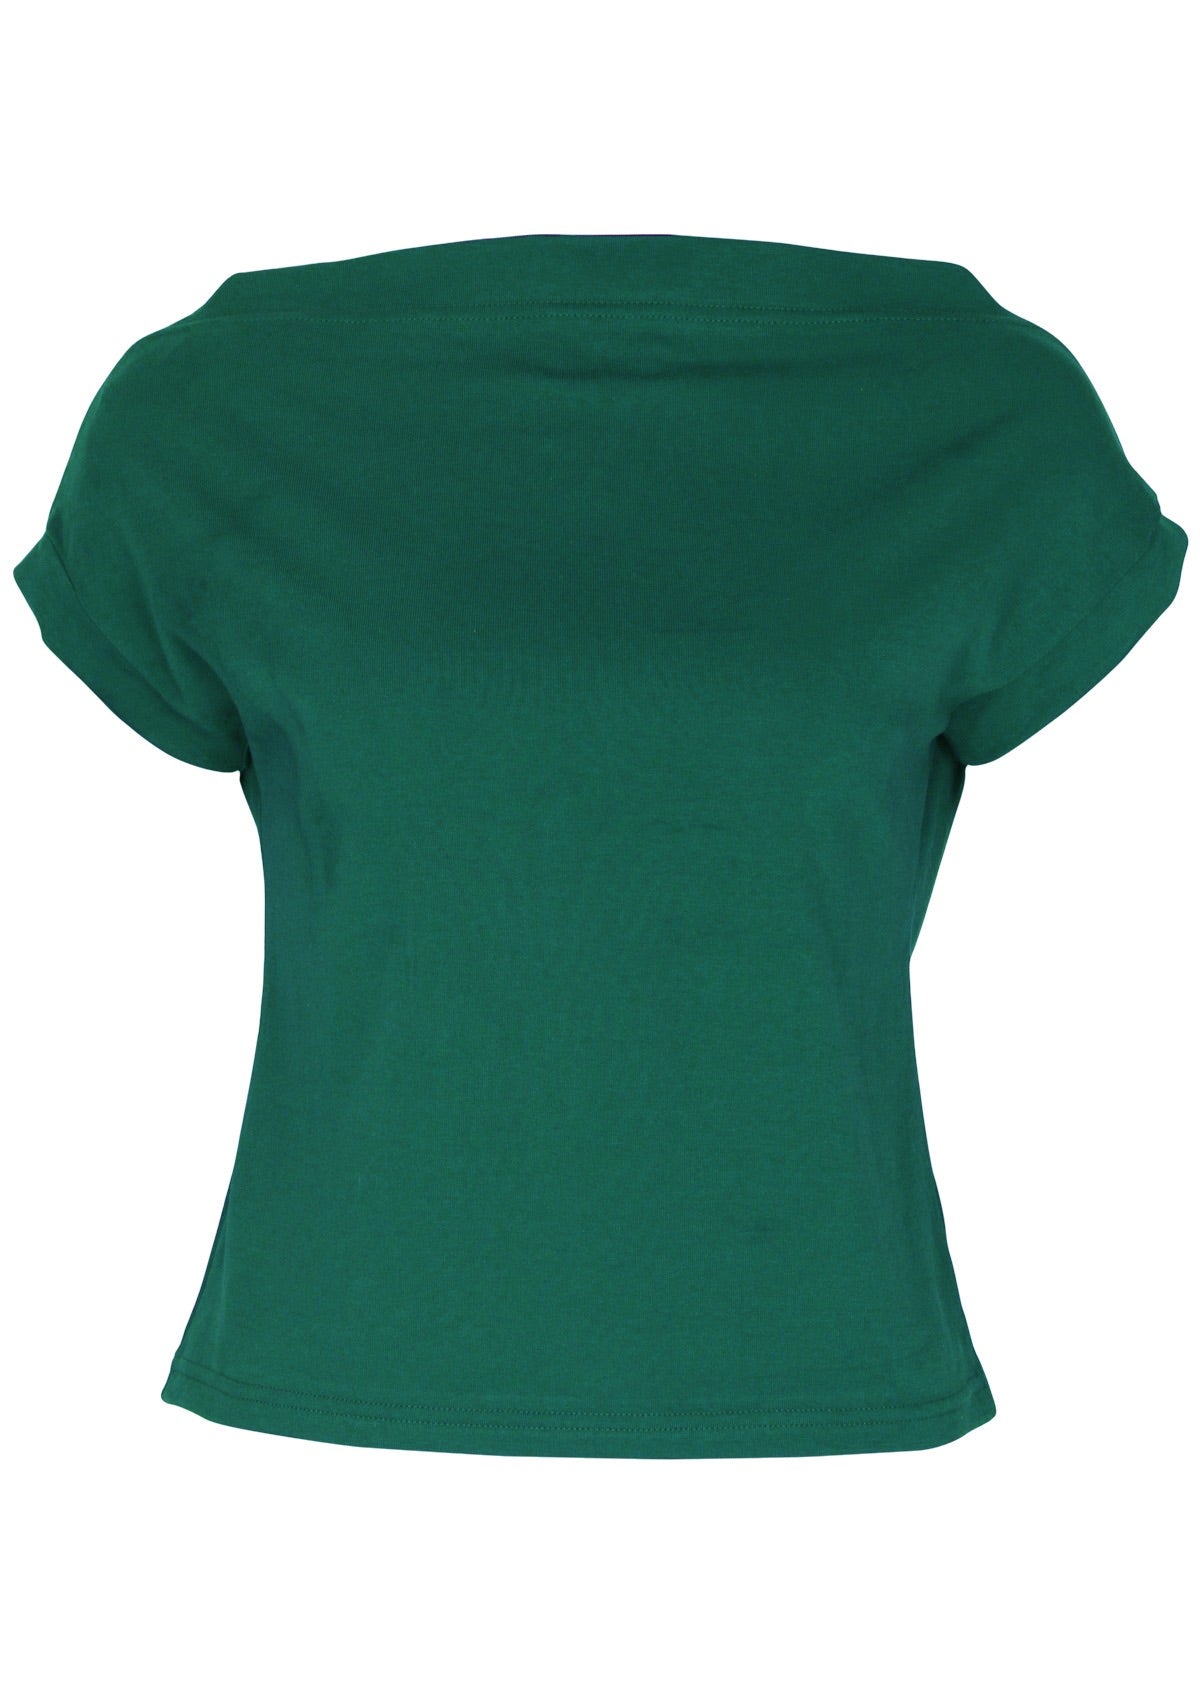 wide neck basic women's top green